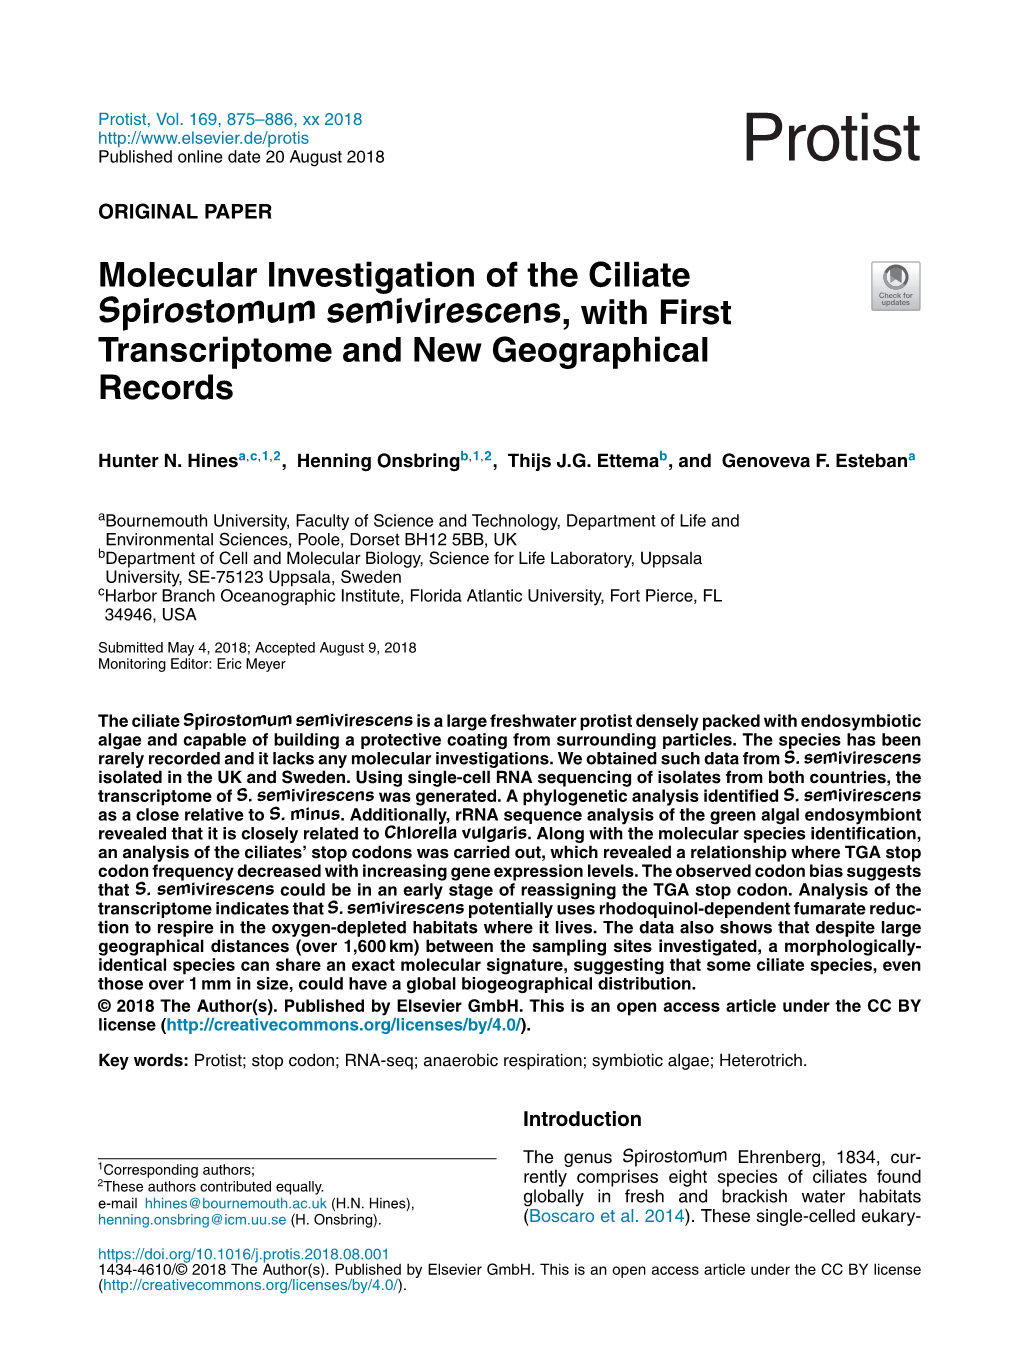 Molecular Investigation of the Ciliate Spirostomum Semivirescens, With